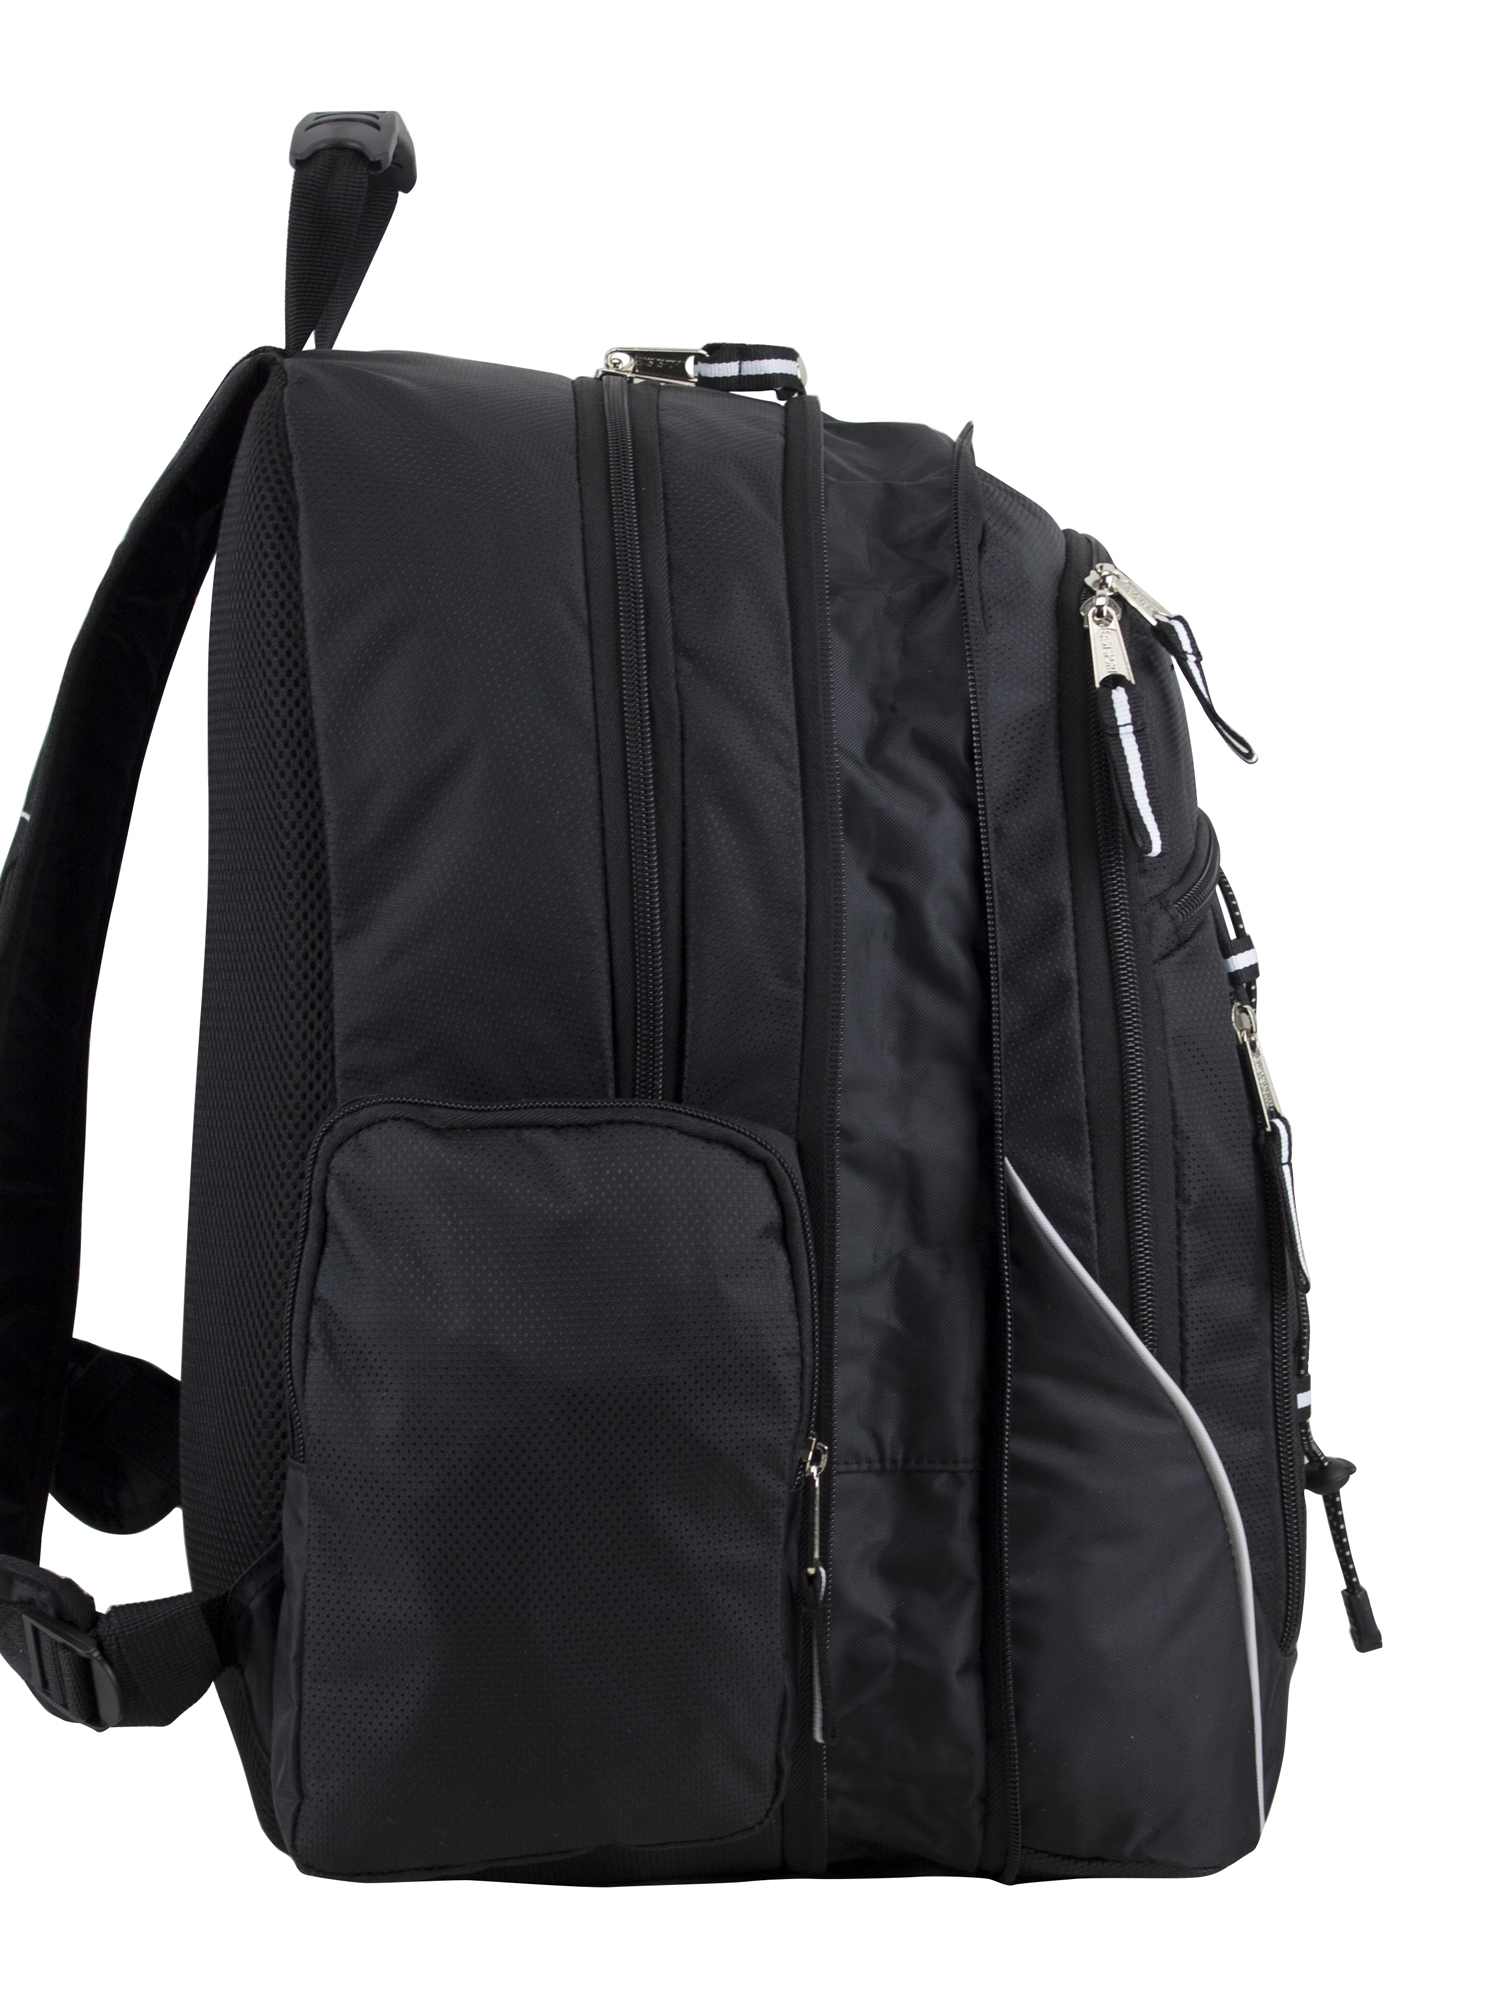 Eastsport Optimus Backpack, Black - image 2 of 7